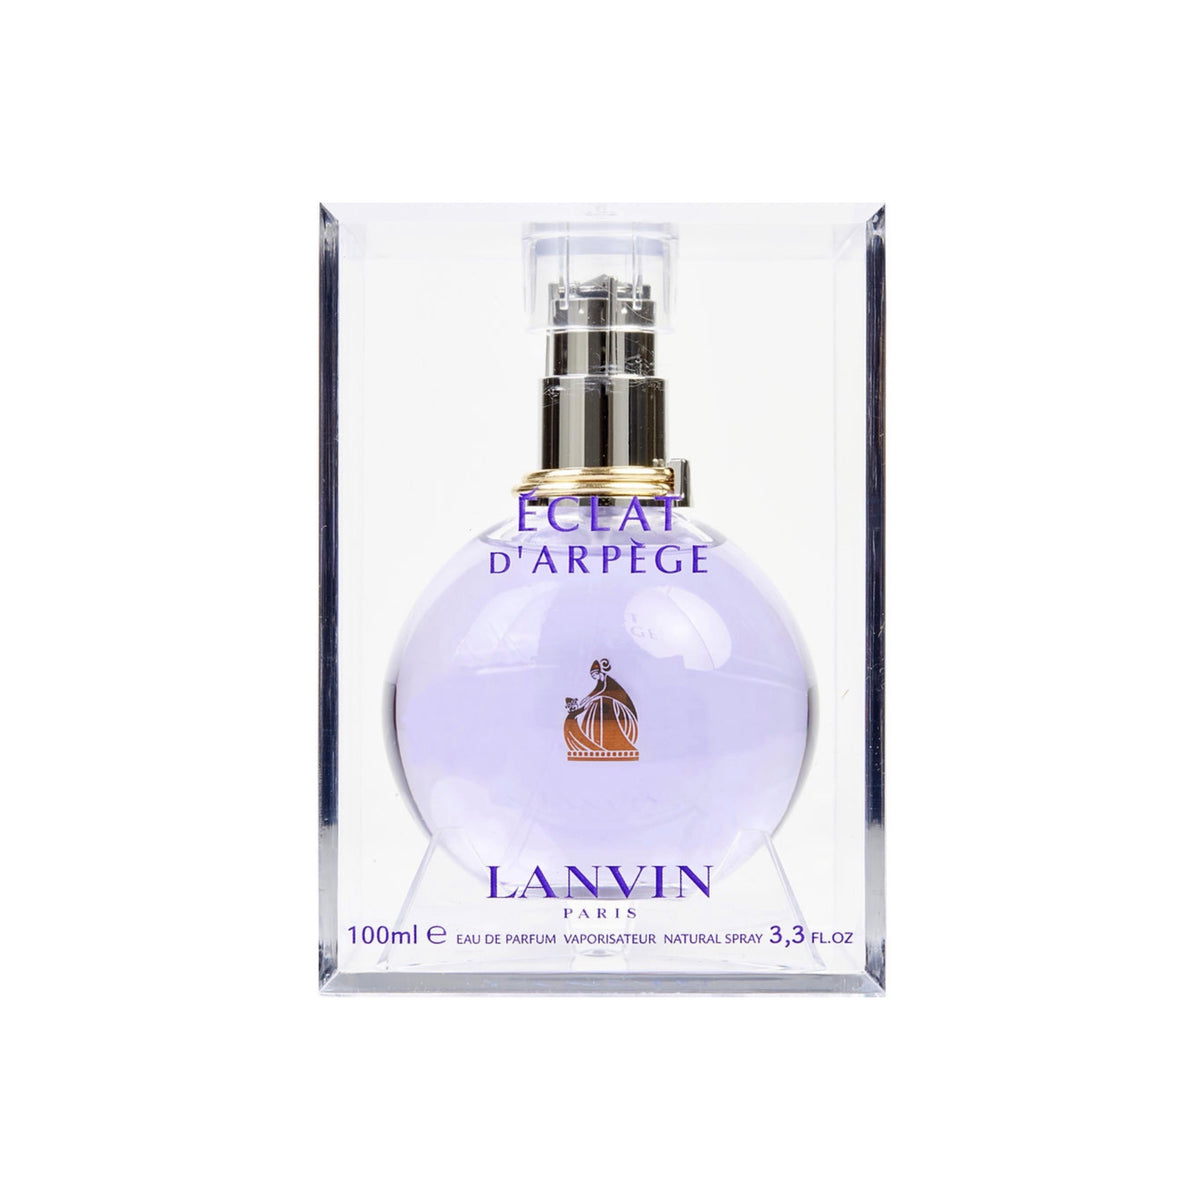 K-POP PANDA - [LANVIN] Eclat d'Arpège Lanvin perfume